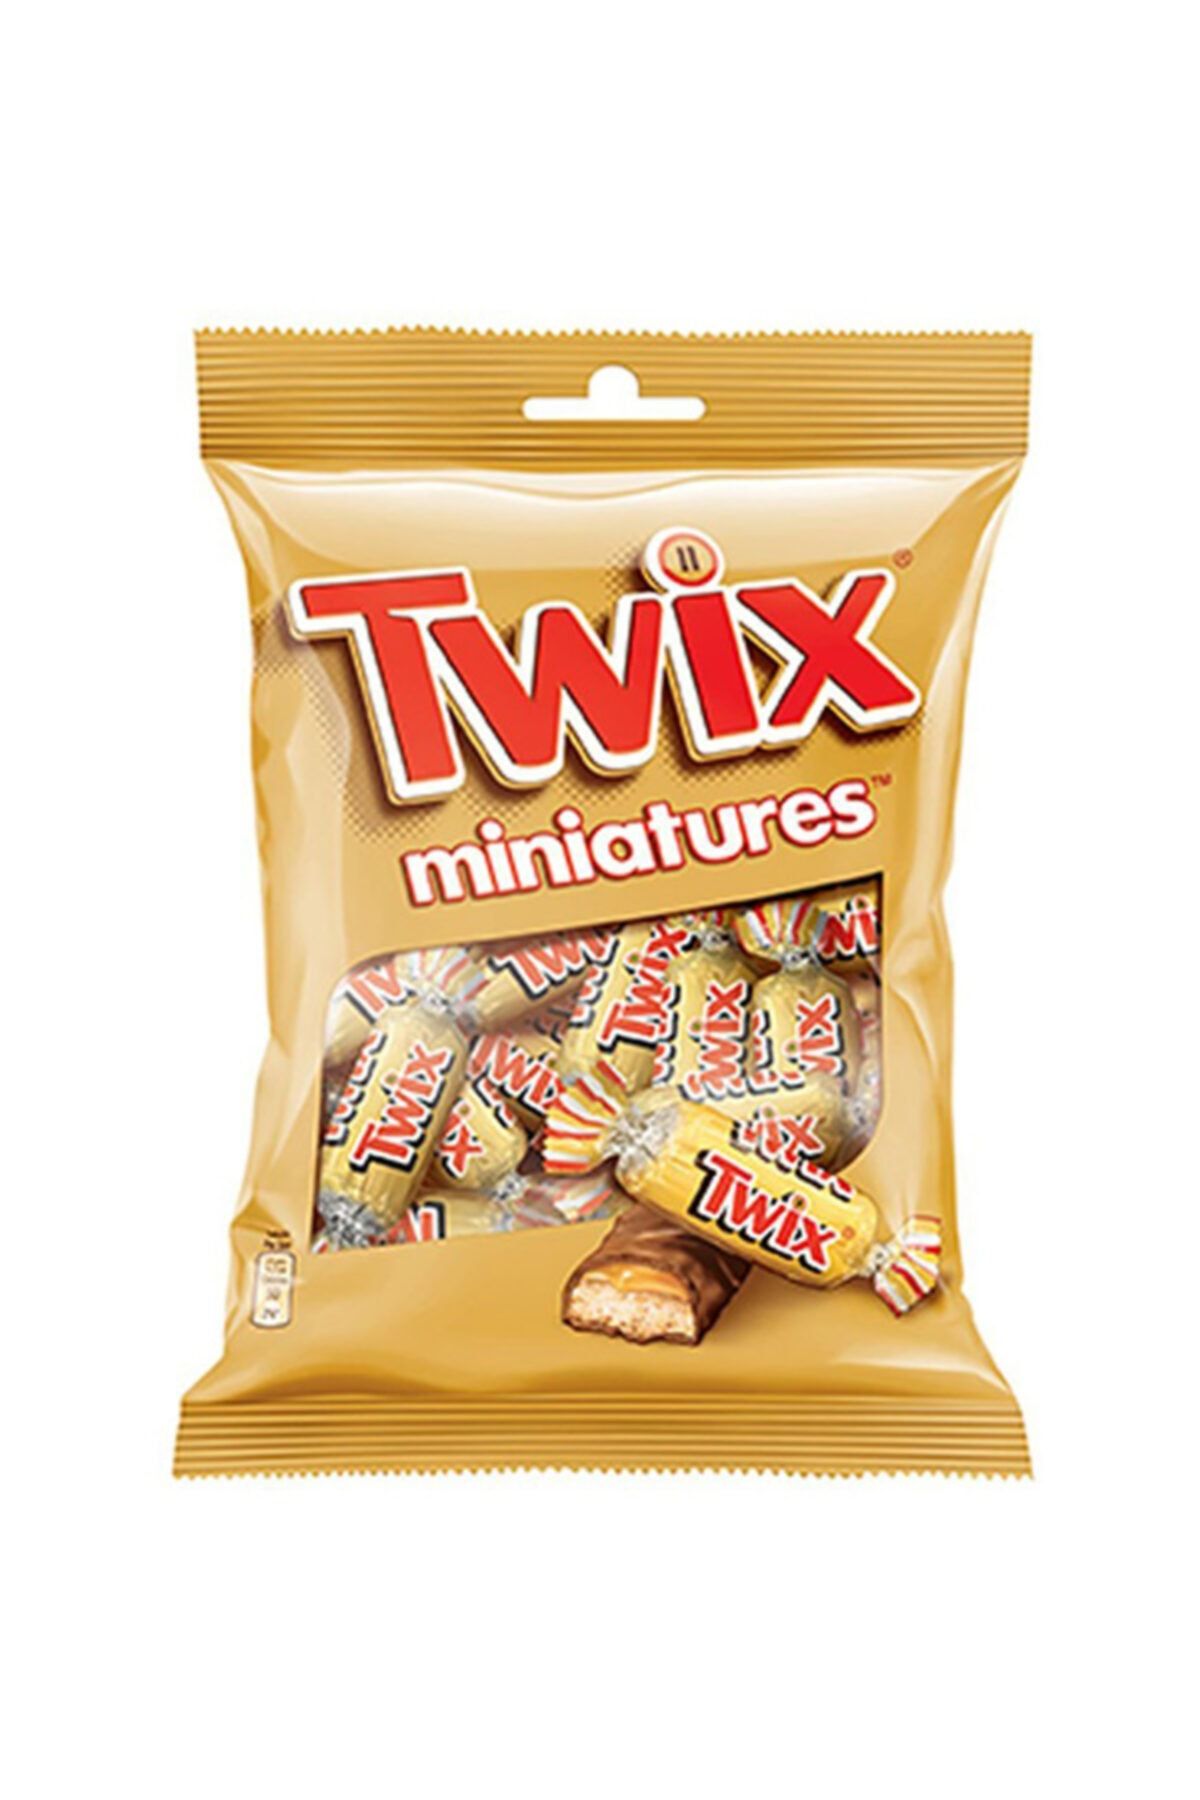 Twix Miniatures, 150g